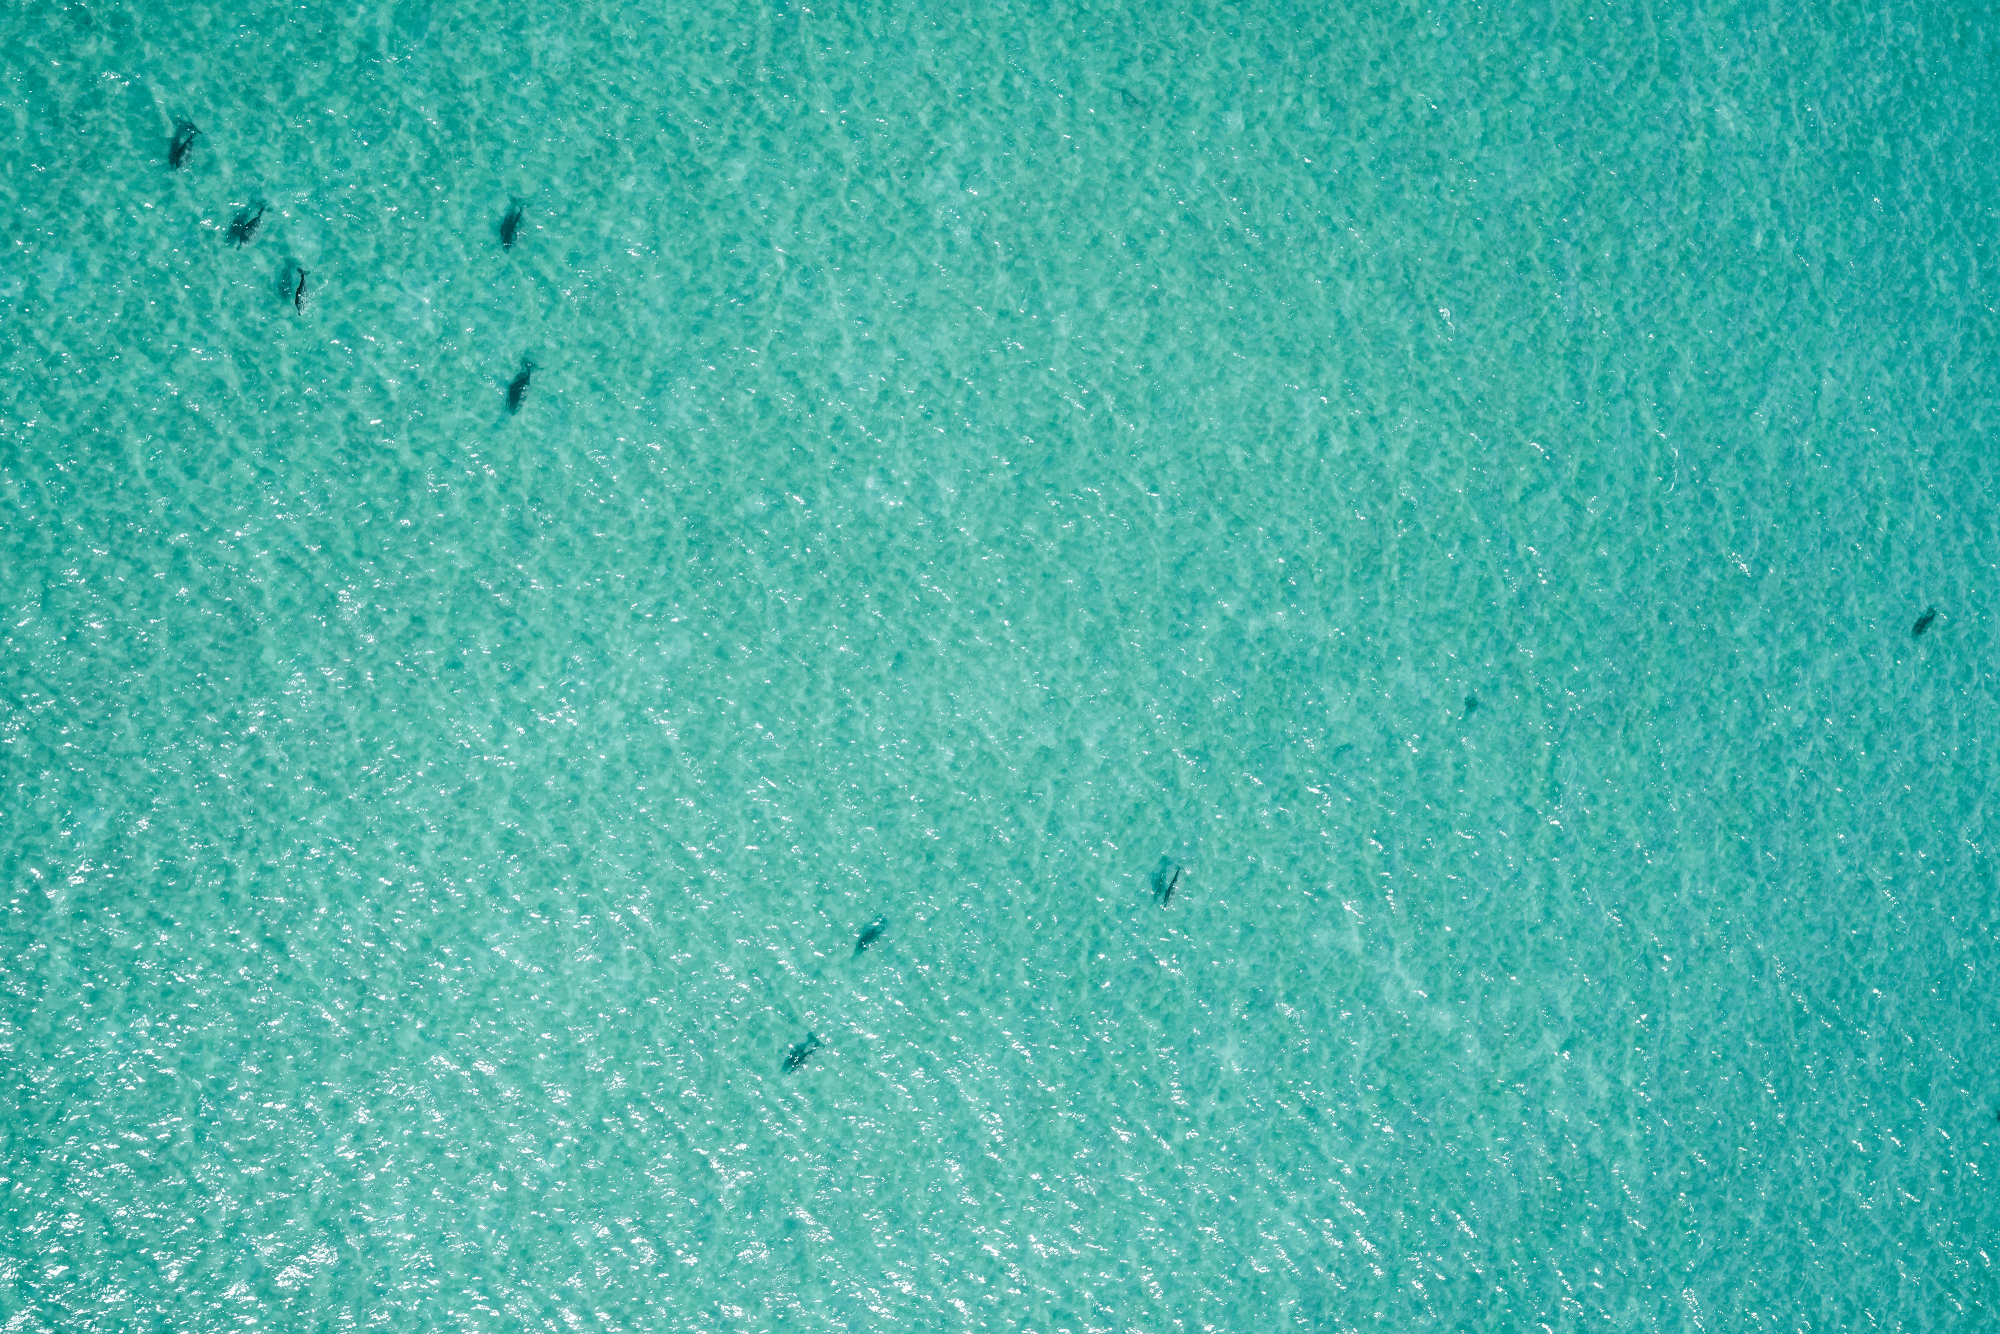 dugong aerial survey